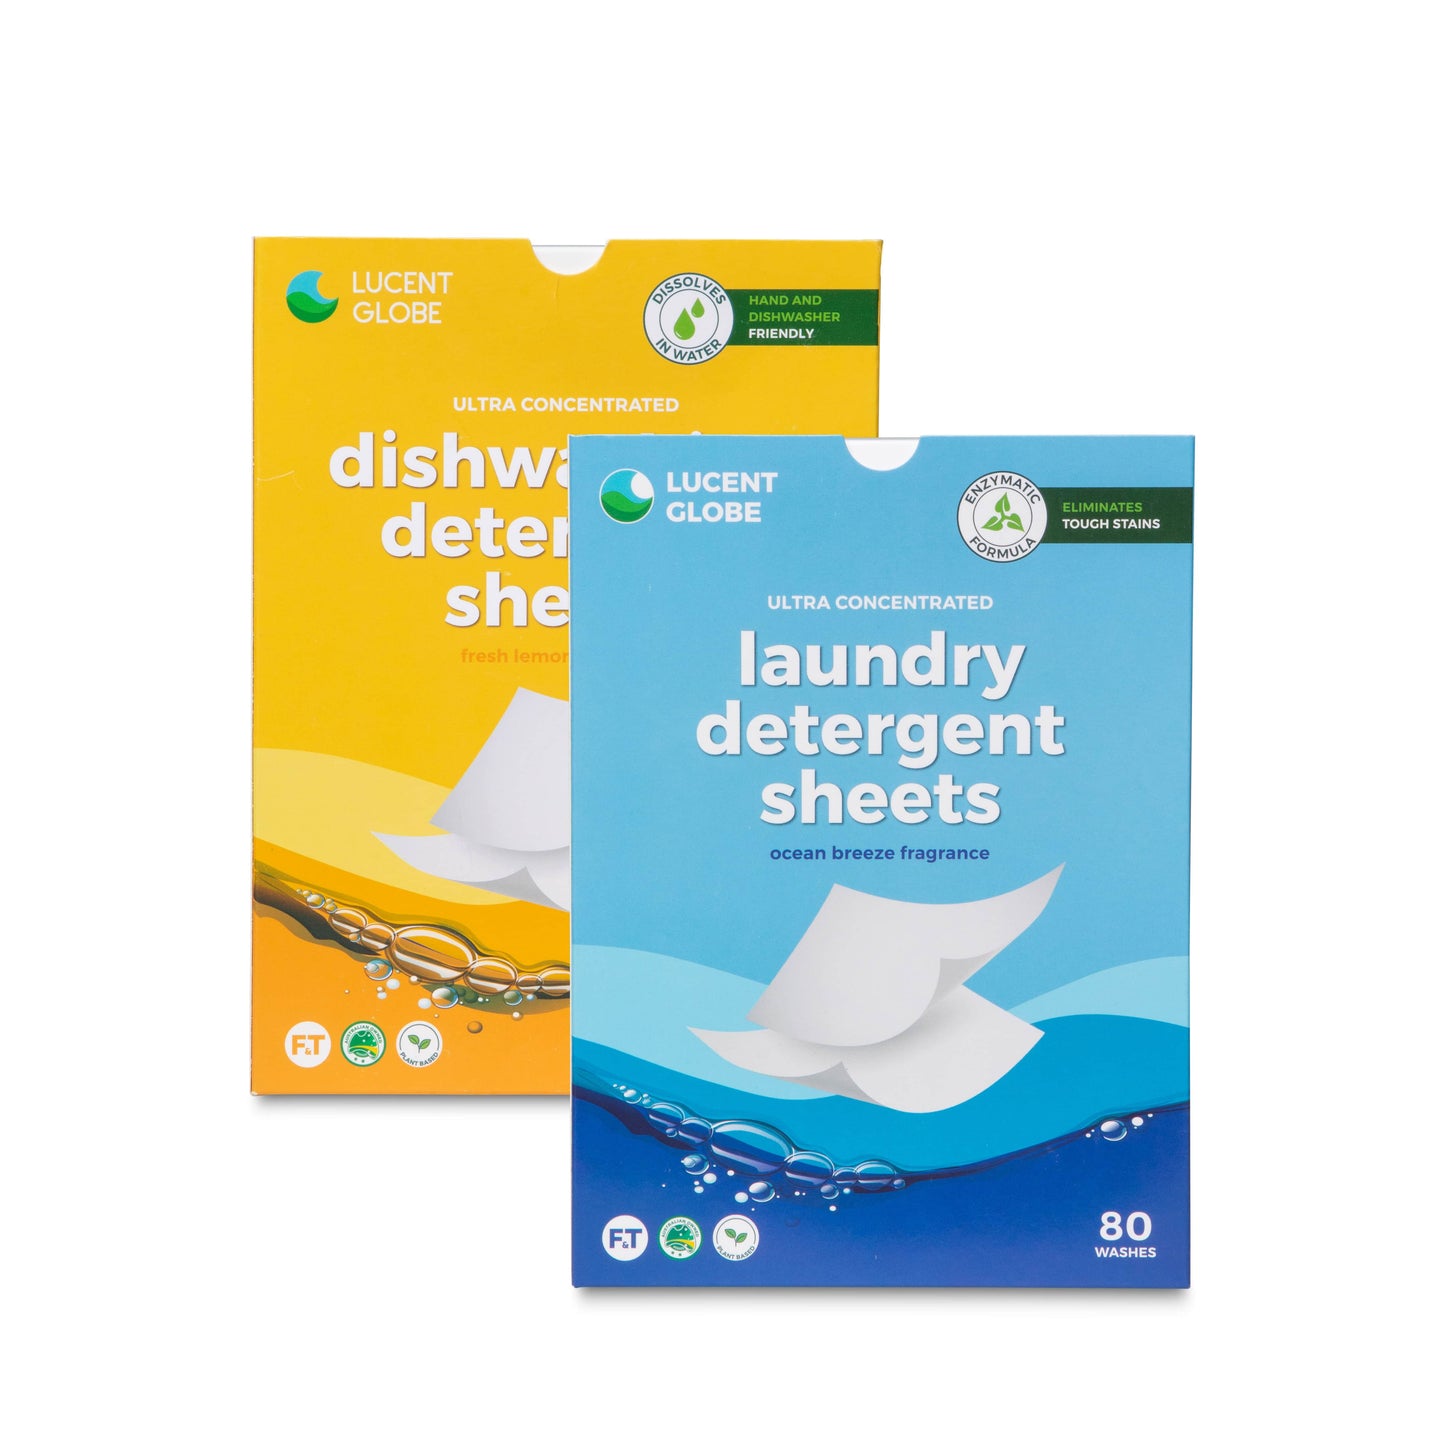 Detergent Sheet Bundle